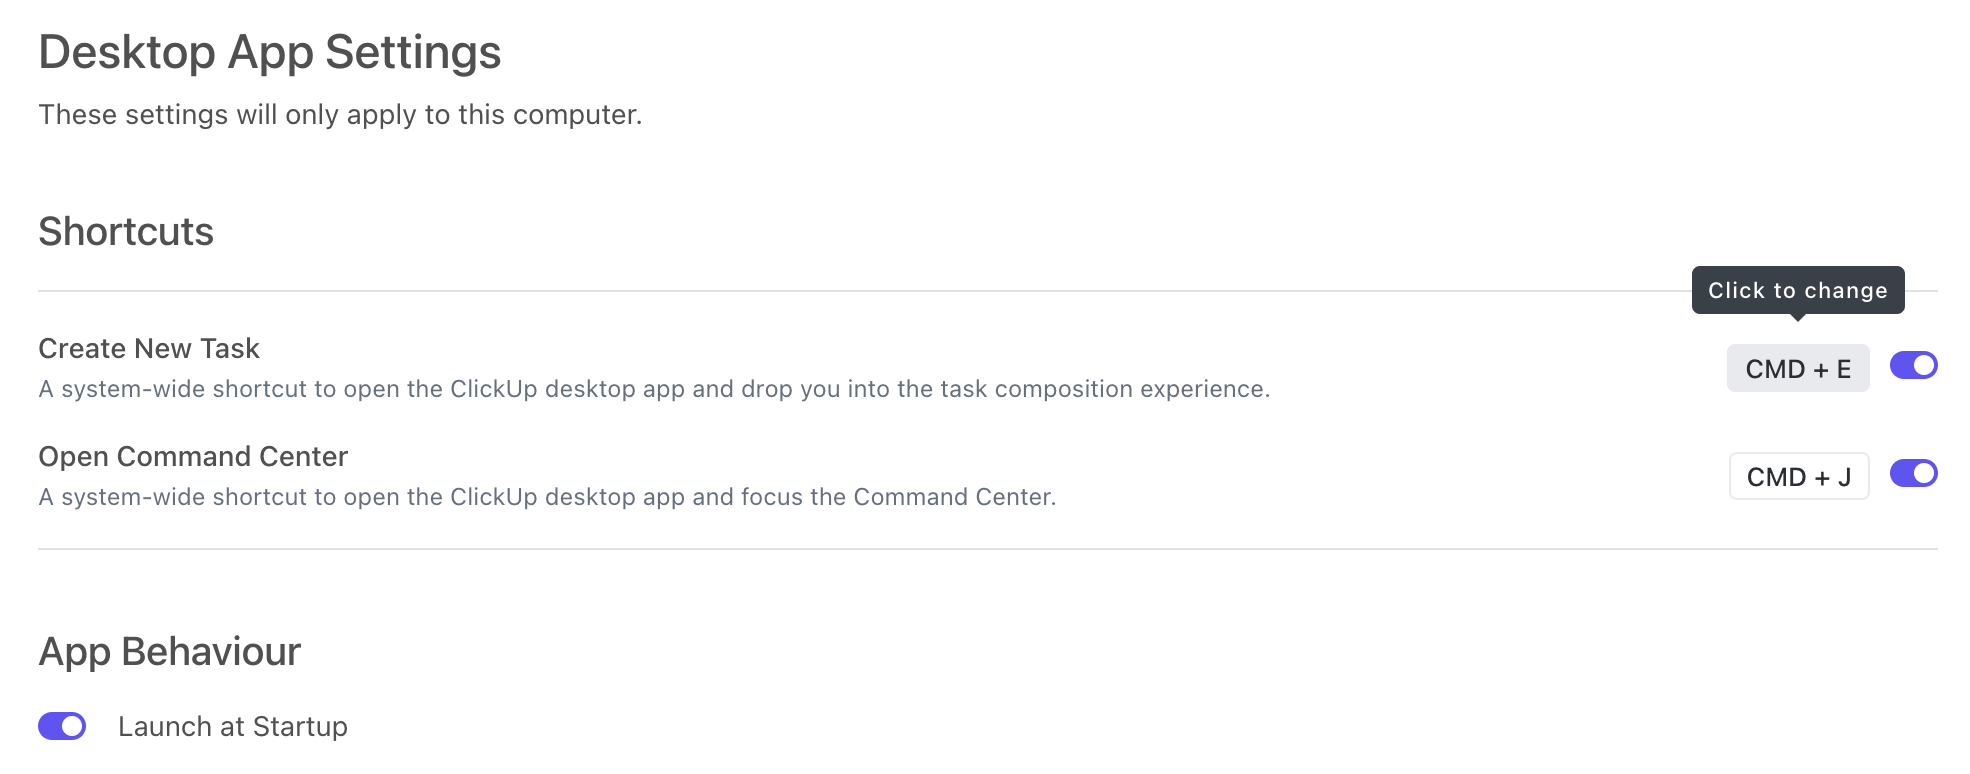 Screenshot of the default app settings for the ClickUp Desktop app.